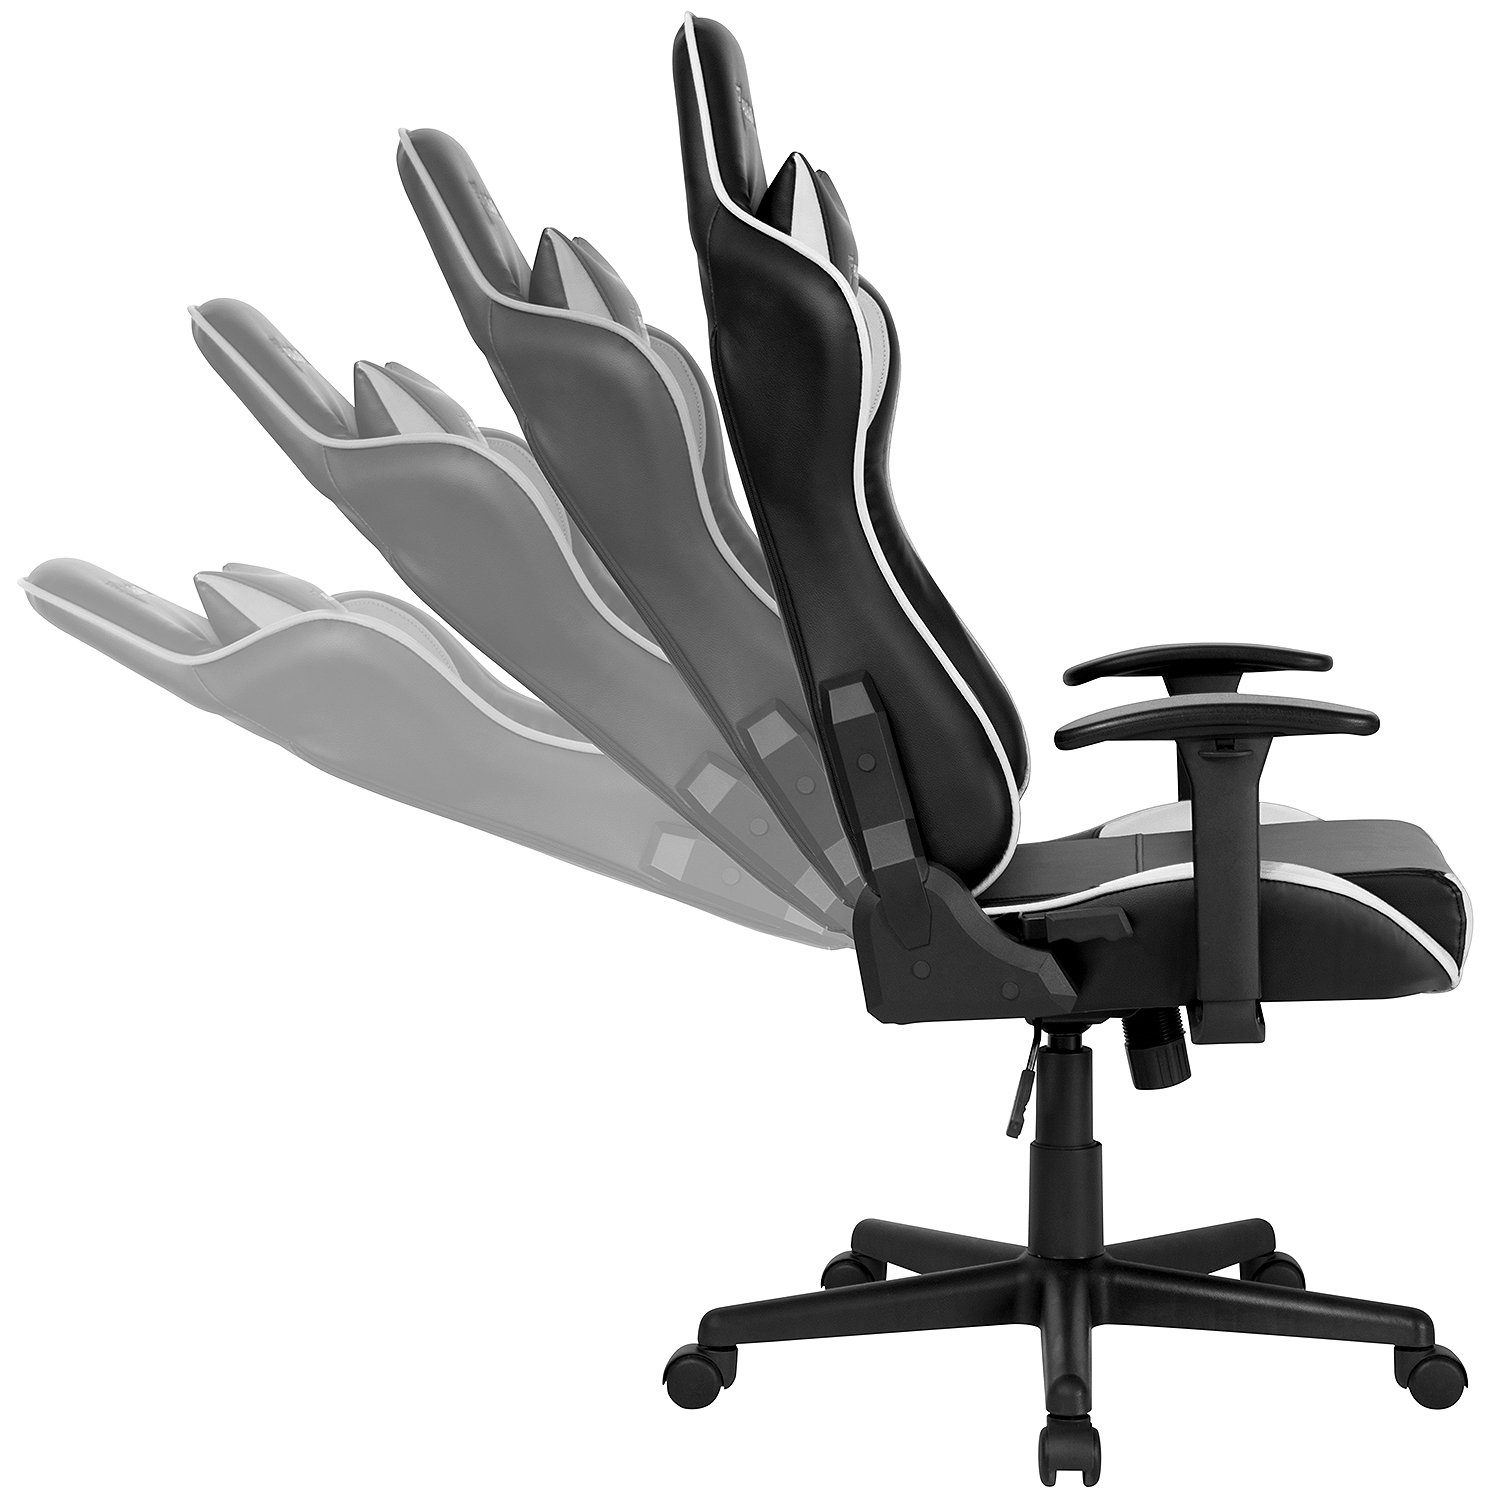 Stuhl Paracon Gaming-Stuhl (1 St) weiß. Gaming ebuy24 Brawler